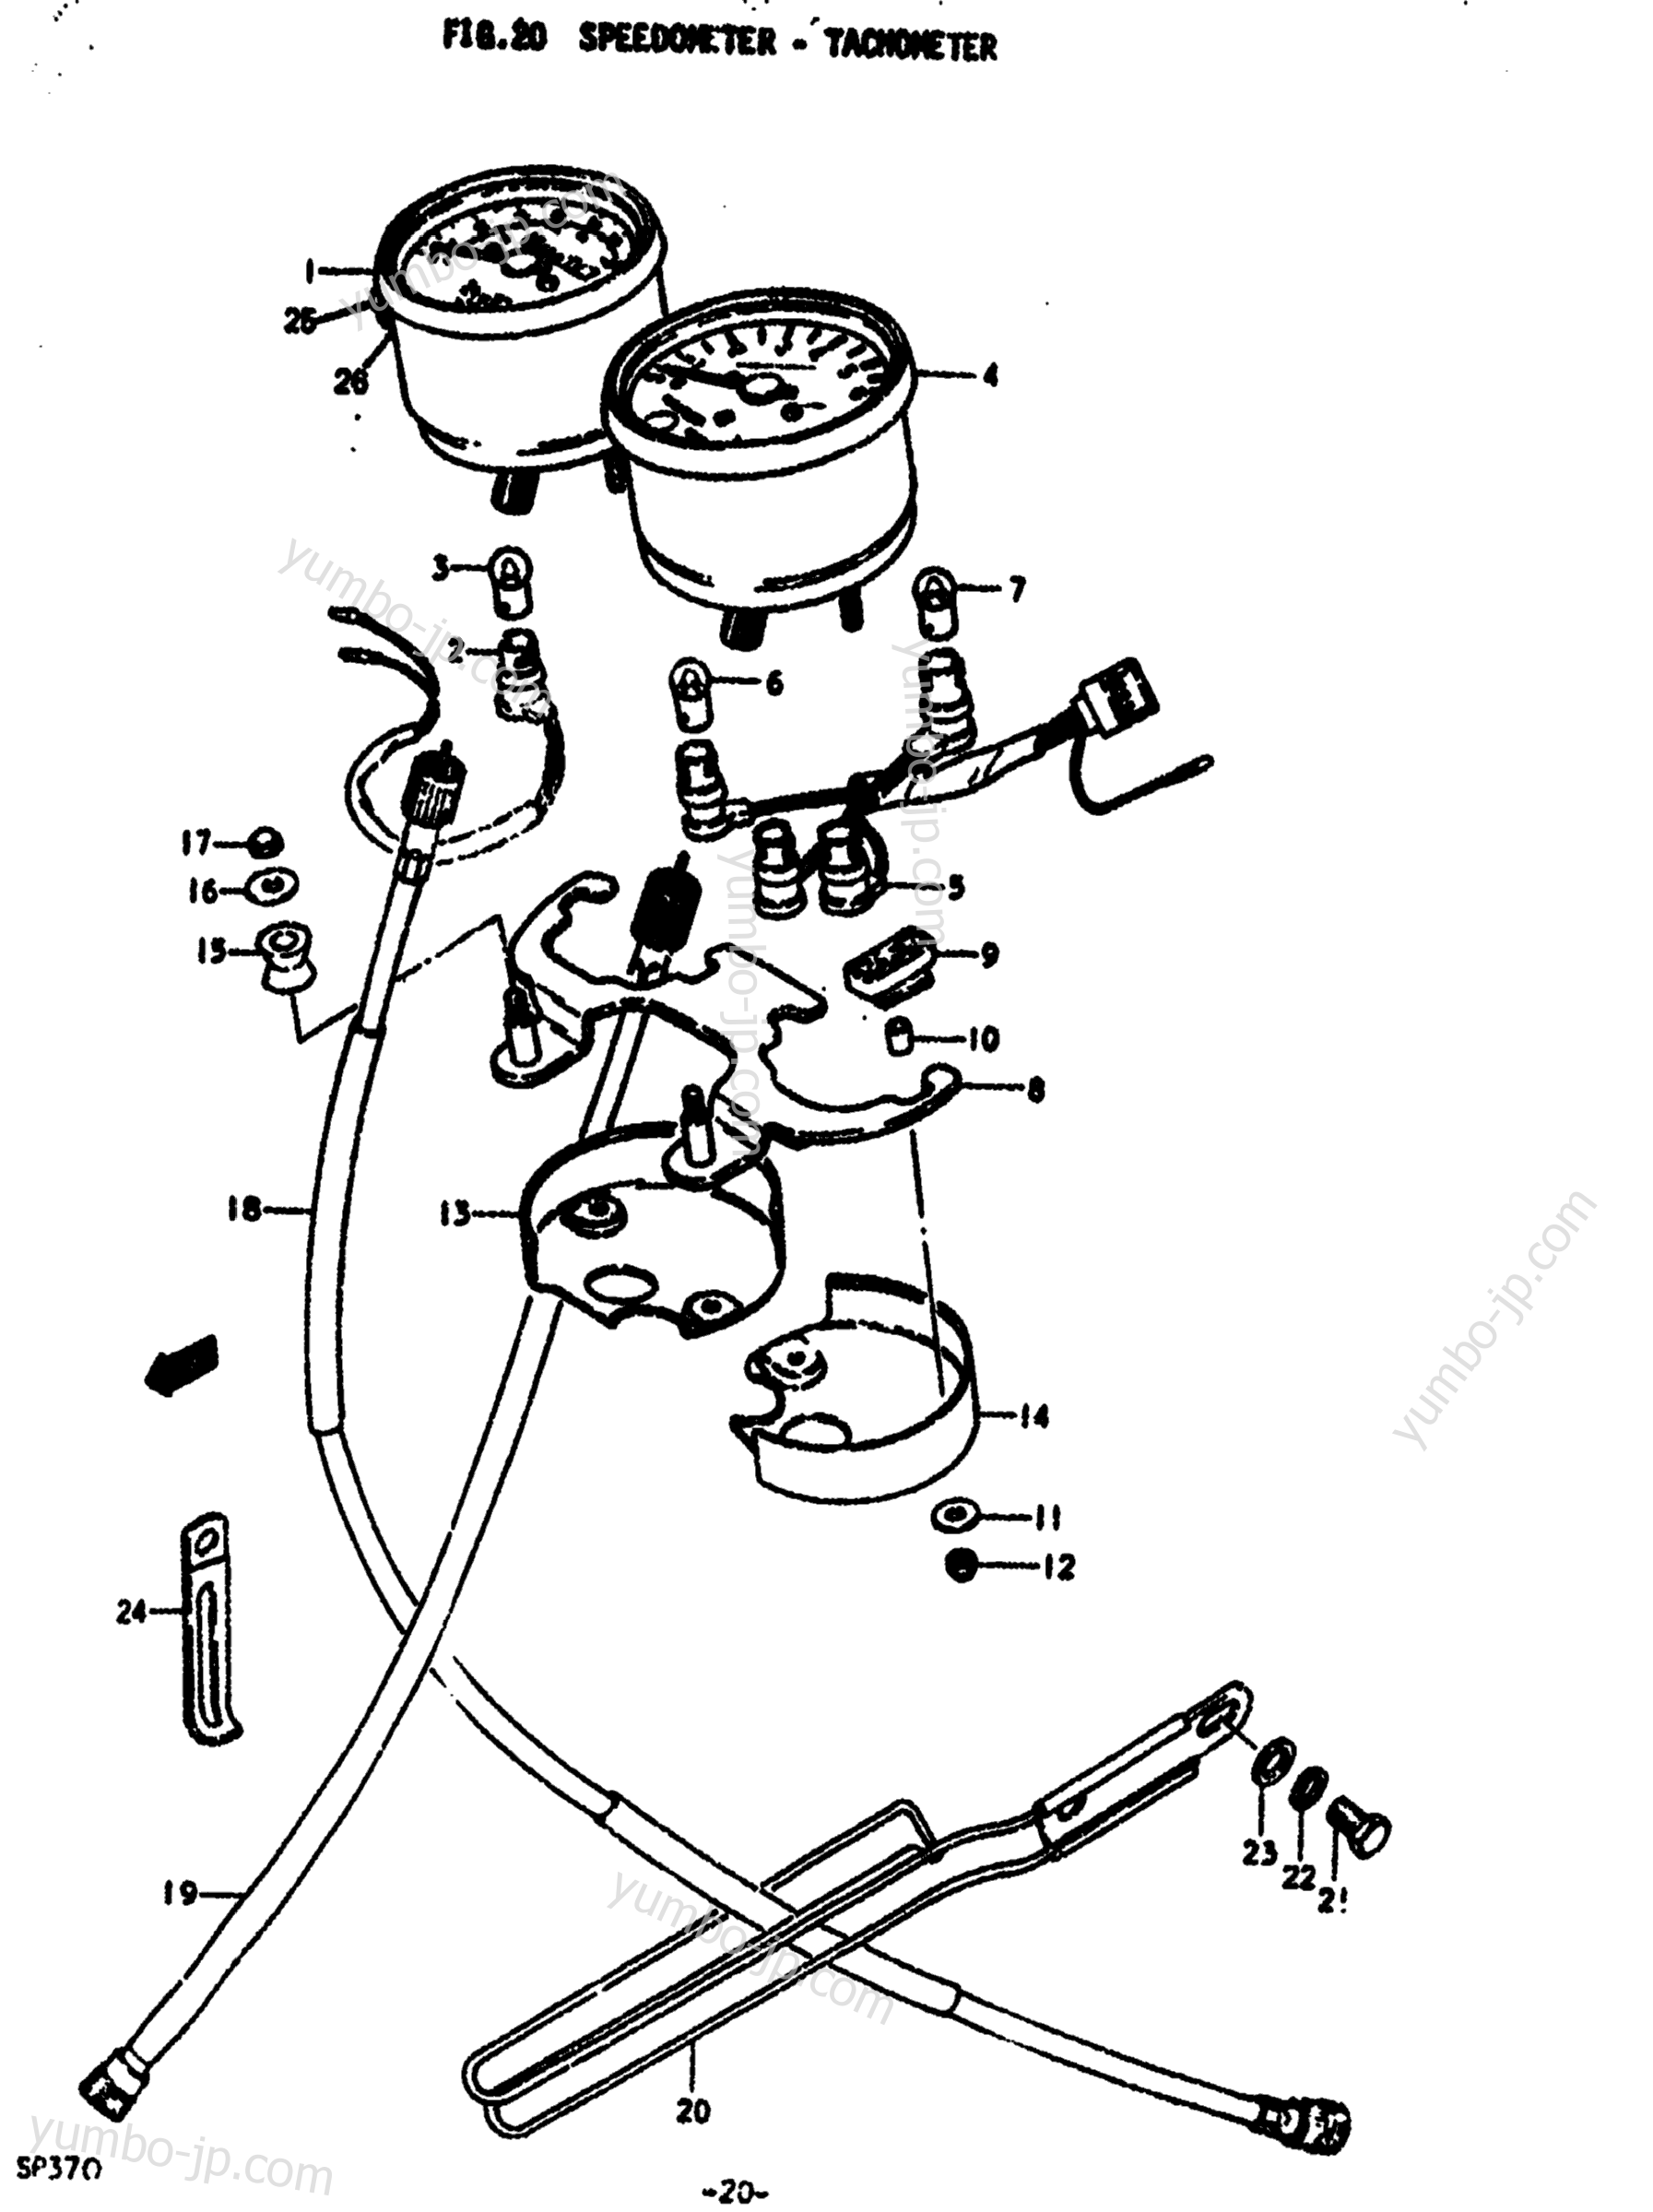 Speedometer - Tachometer для мотоциклов SUZUKI SP370 1978 г.